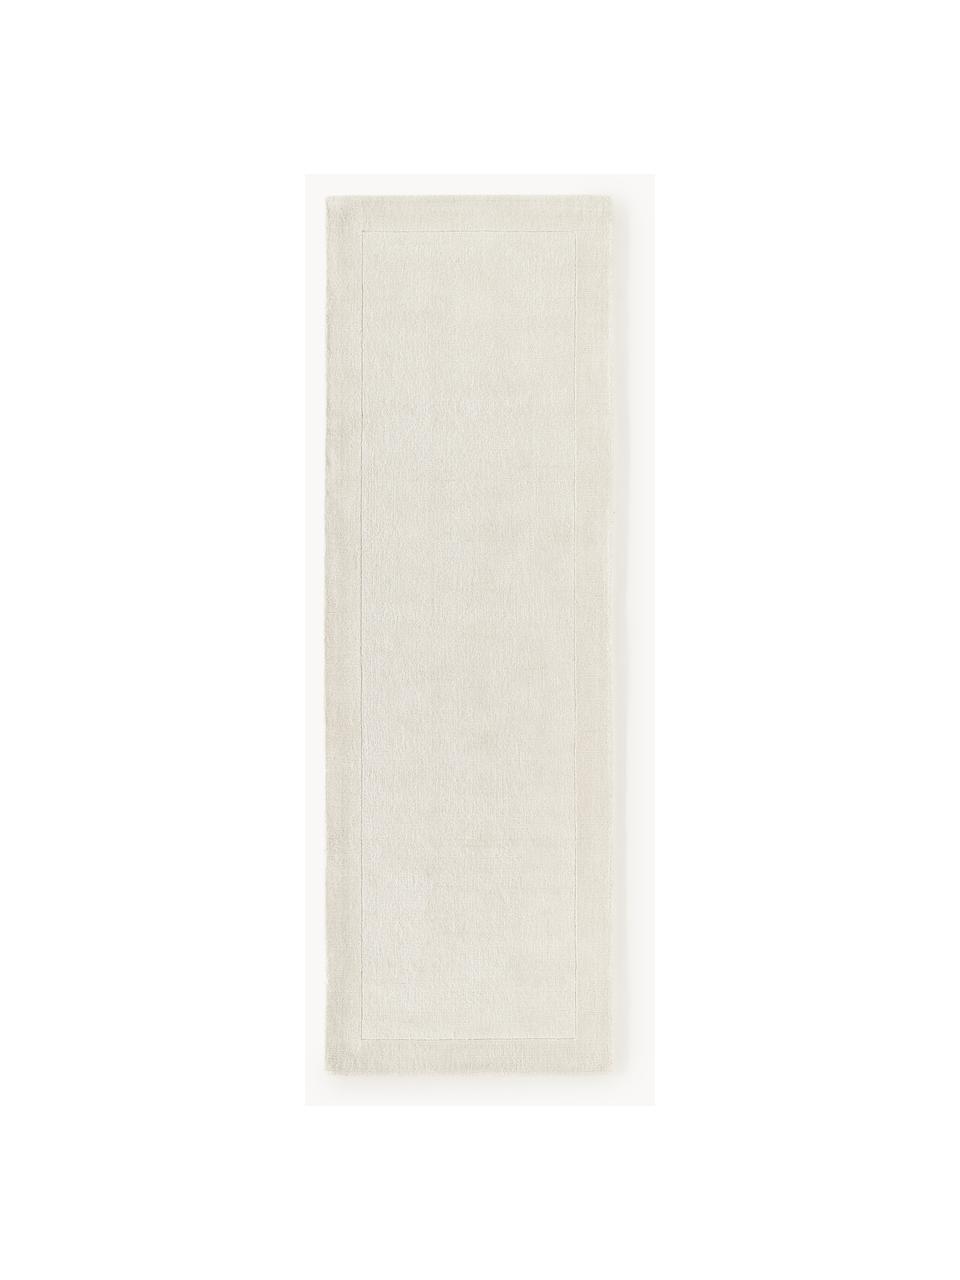 Tapis à poils courts Kari, 100 % polyester, certifié GRS, Blanc crème, larg. 80 x long. 250 cm